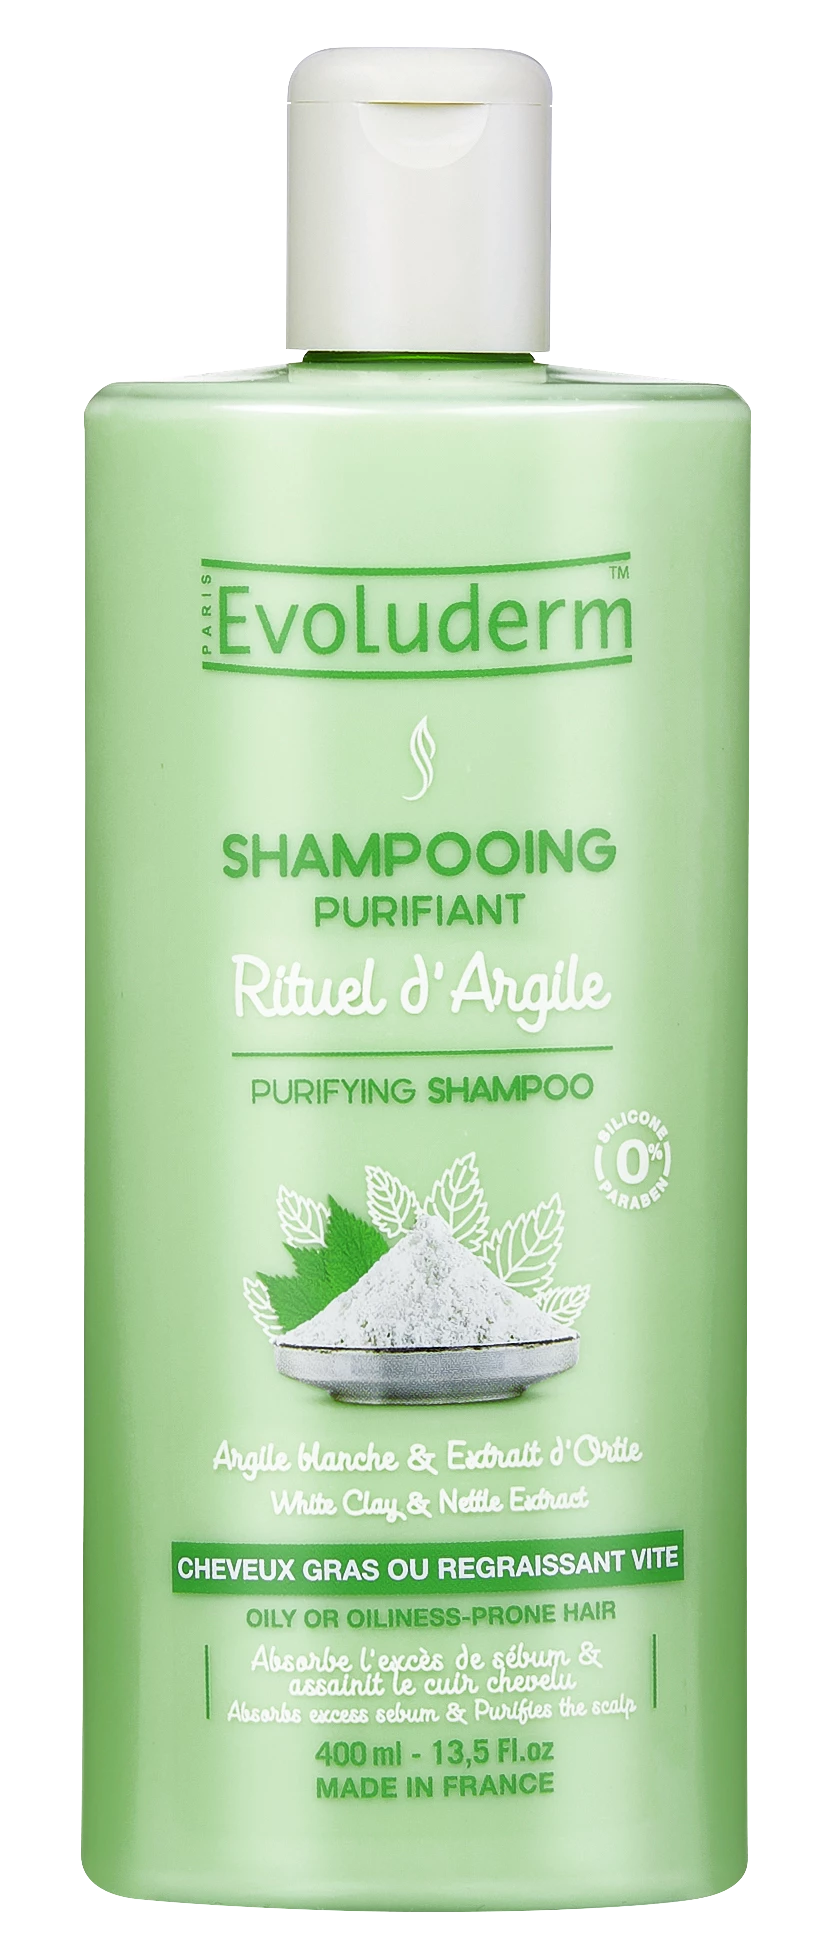 Shampoing Purifiant Rituel D'argile 400ml - Evoluderm